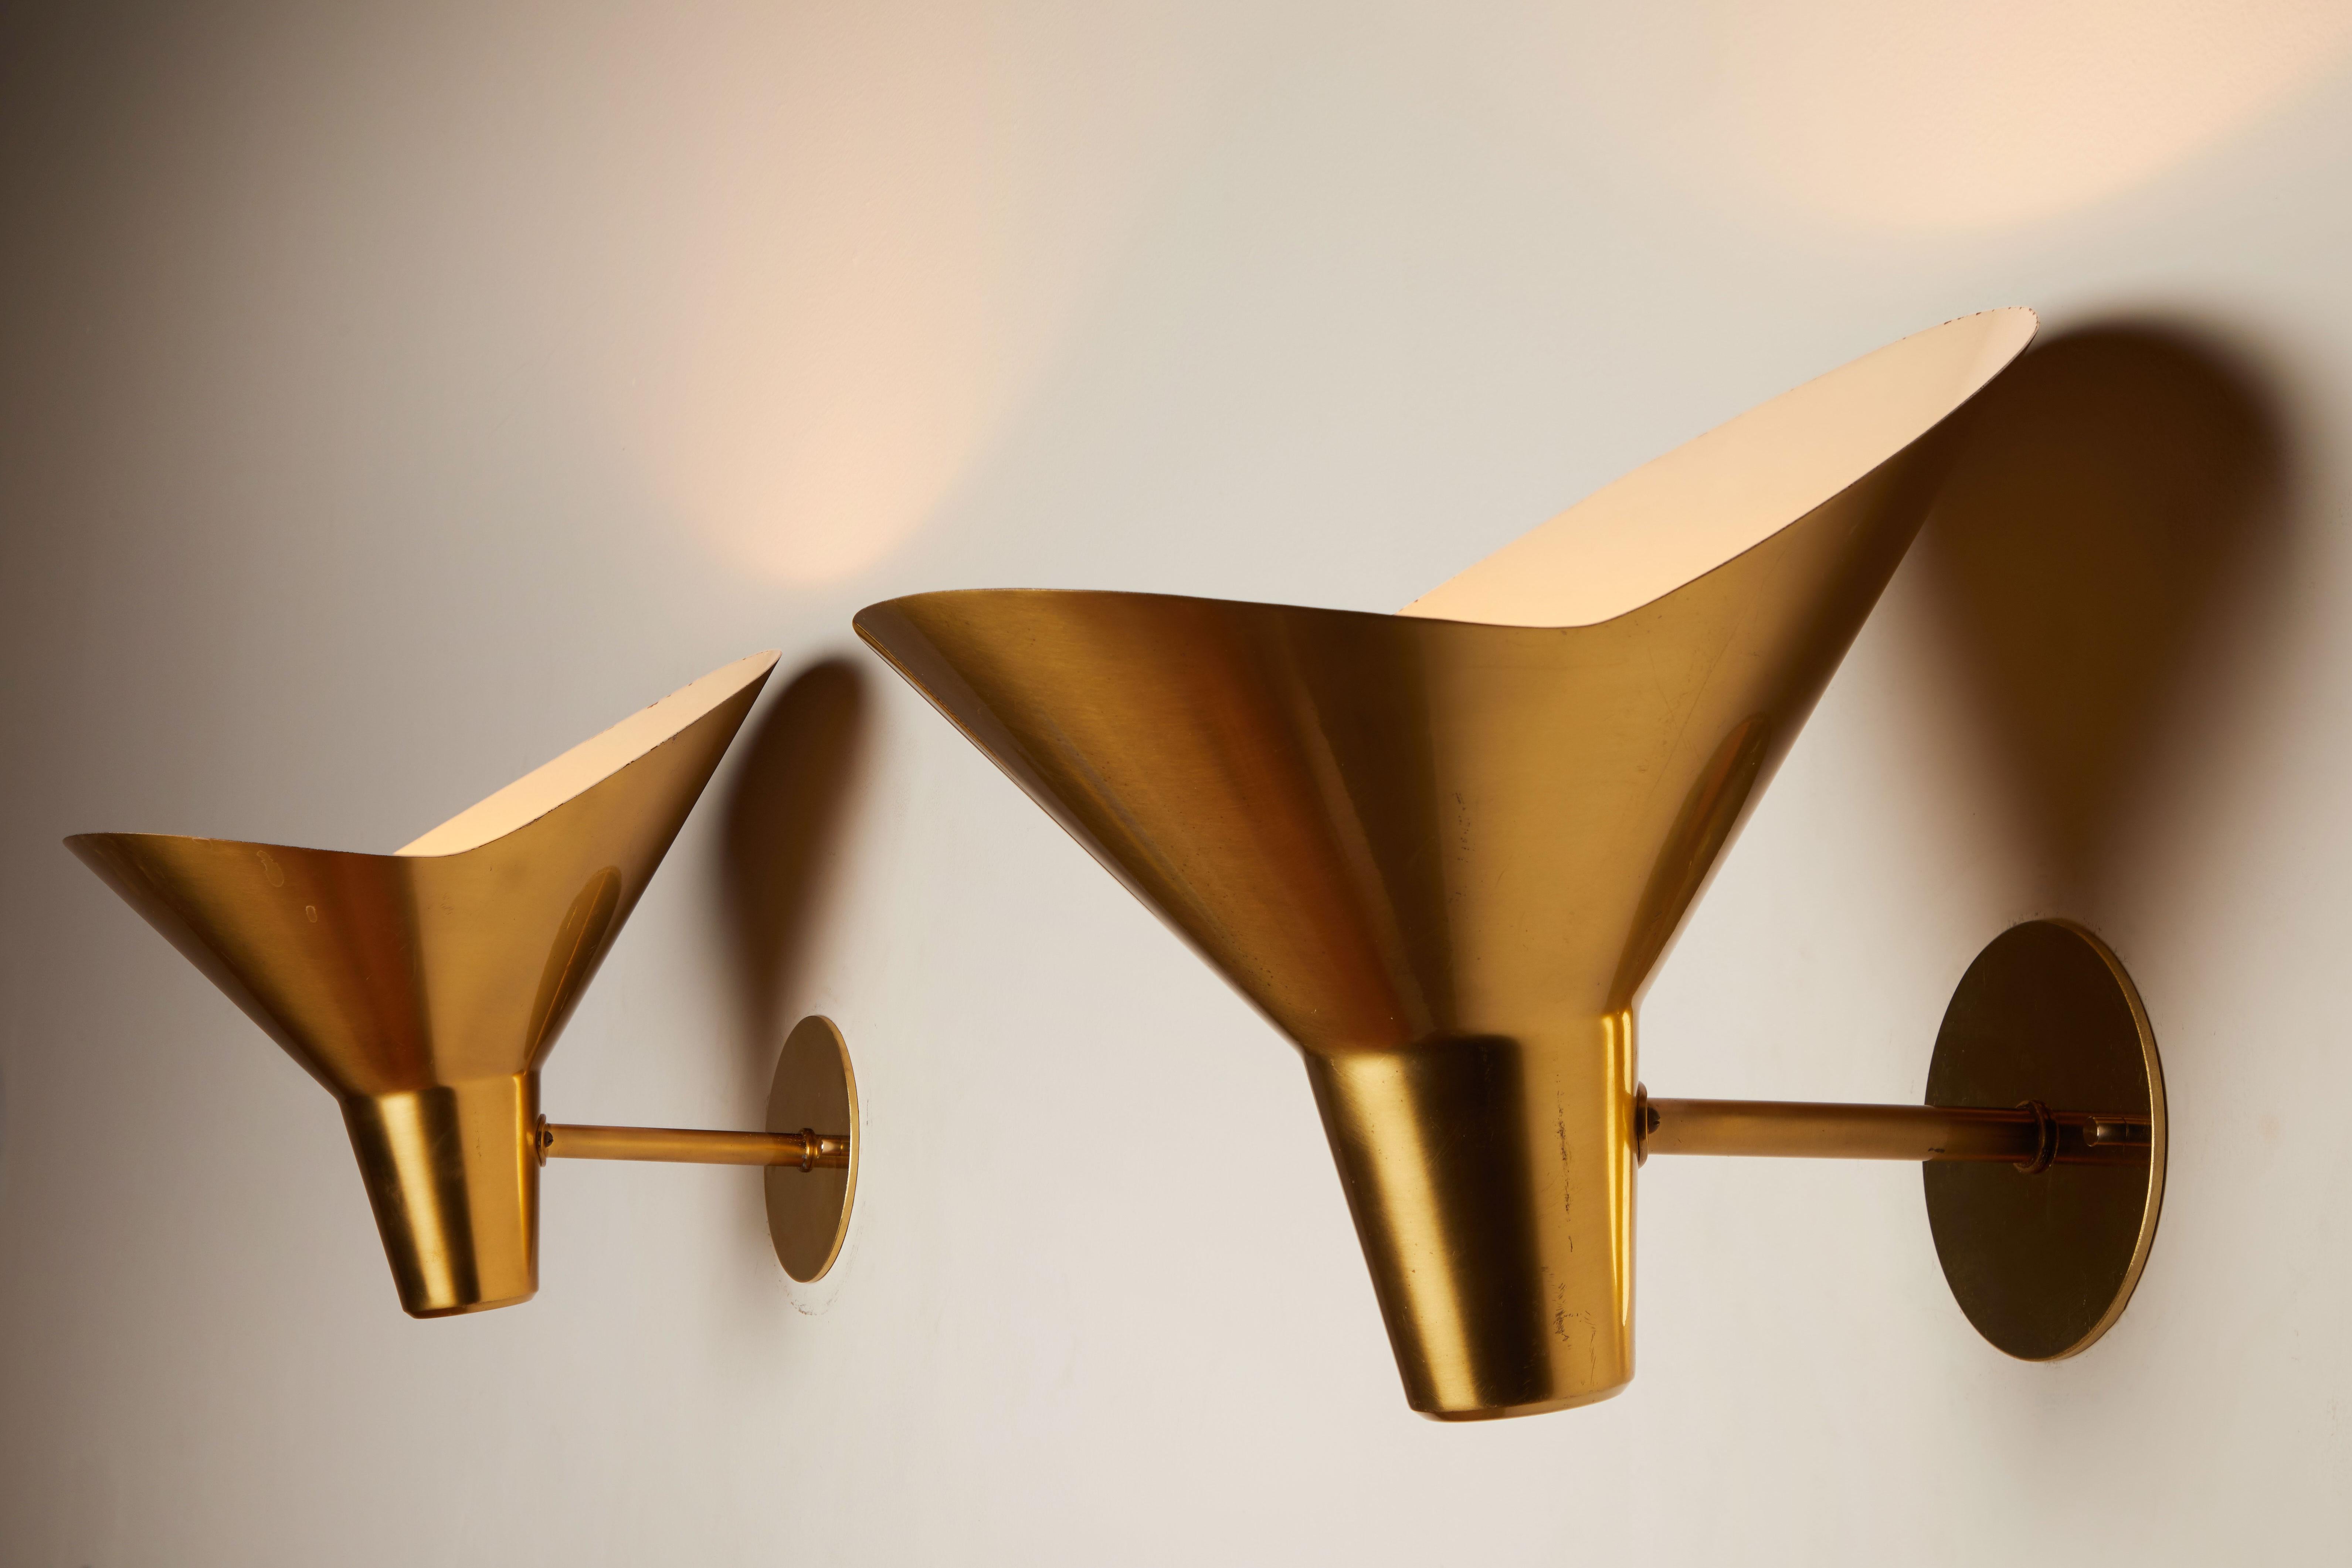 Polished Pair of Brass Sconces by Hans Bergström for Ateljé Lyktan